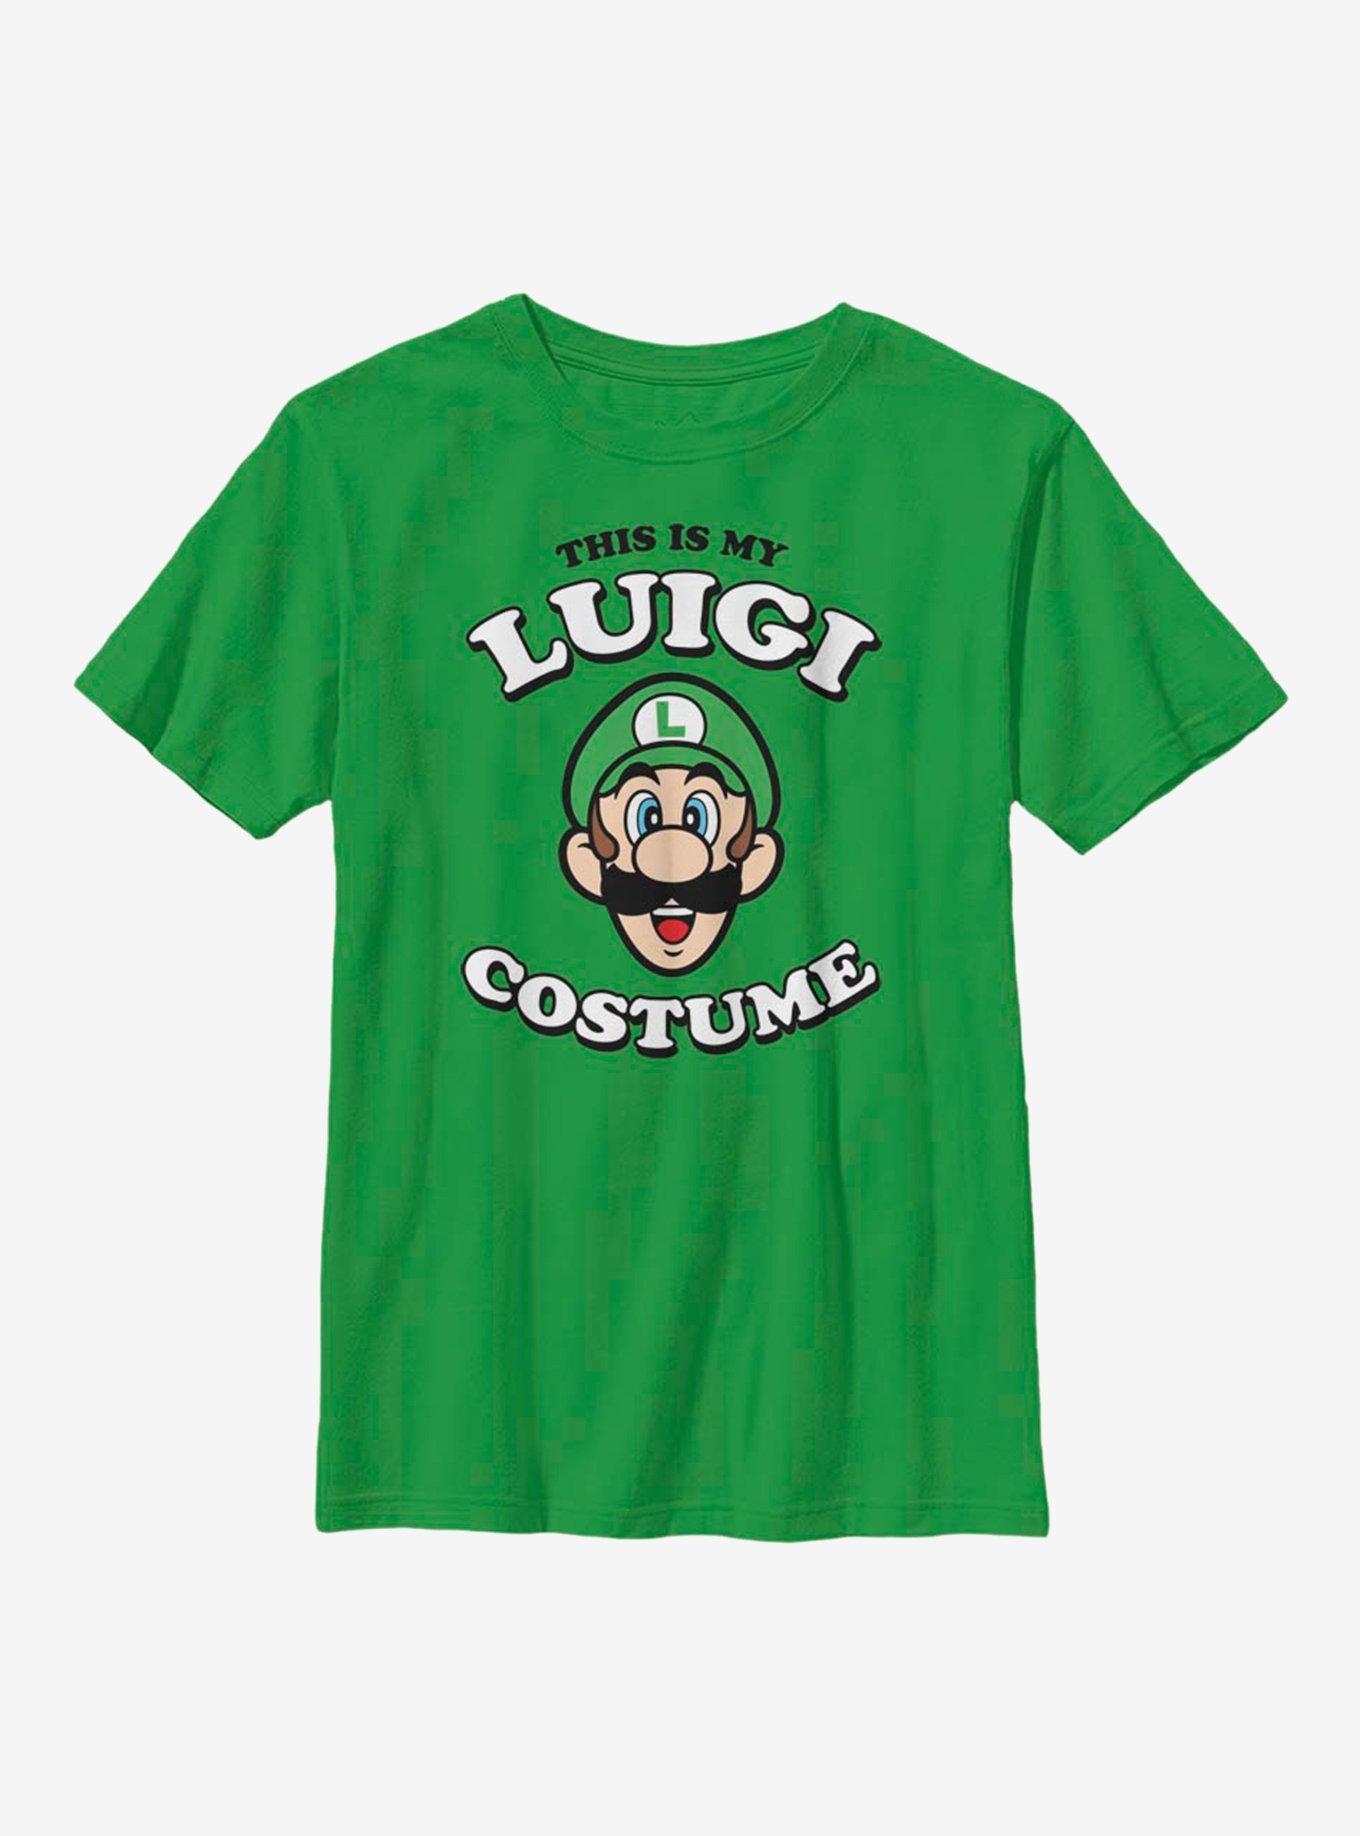 Nintendo Super Mario Luigi Costume Youth T-Shirt, KELLY, hi-res